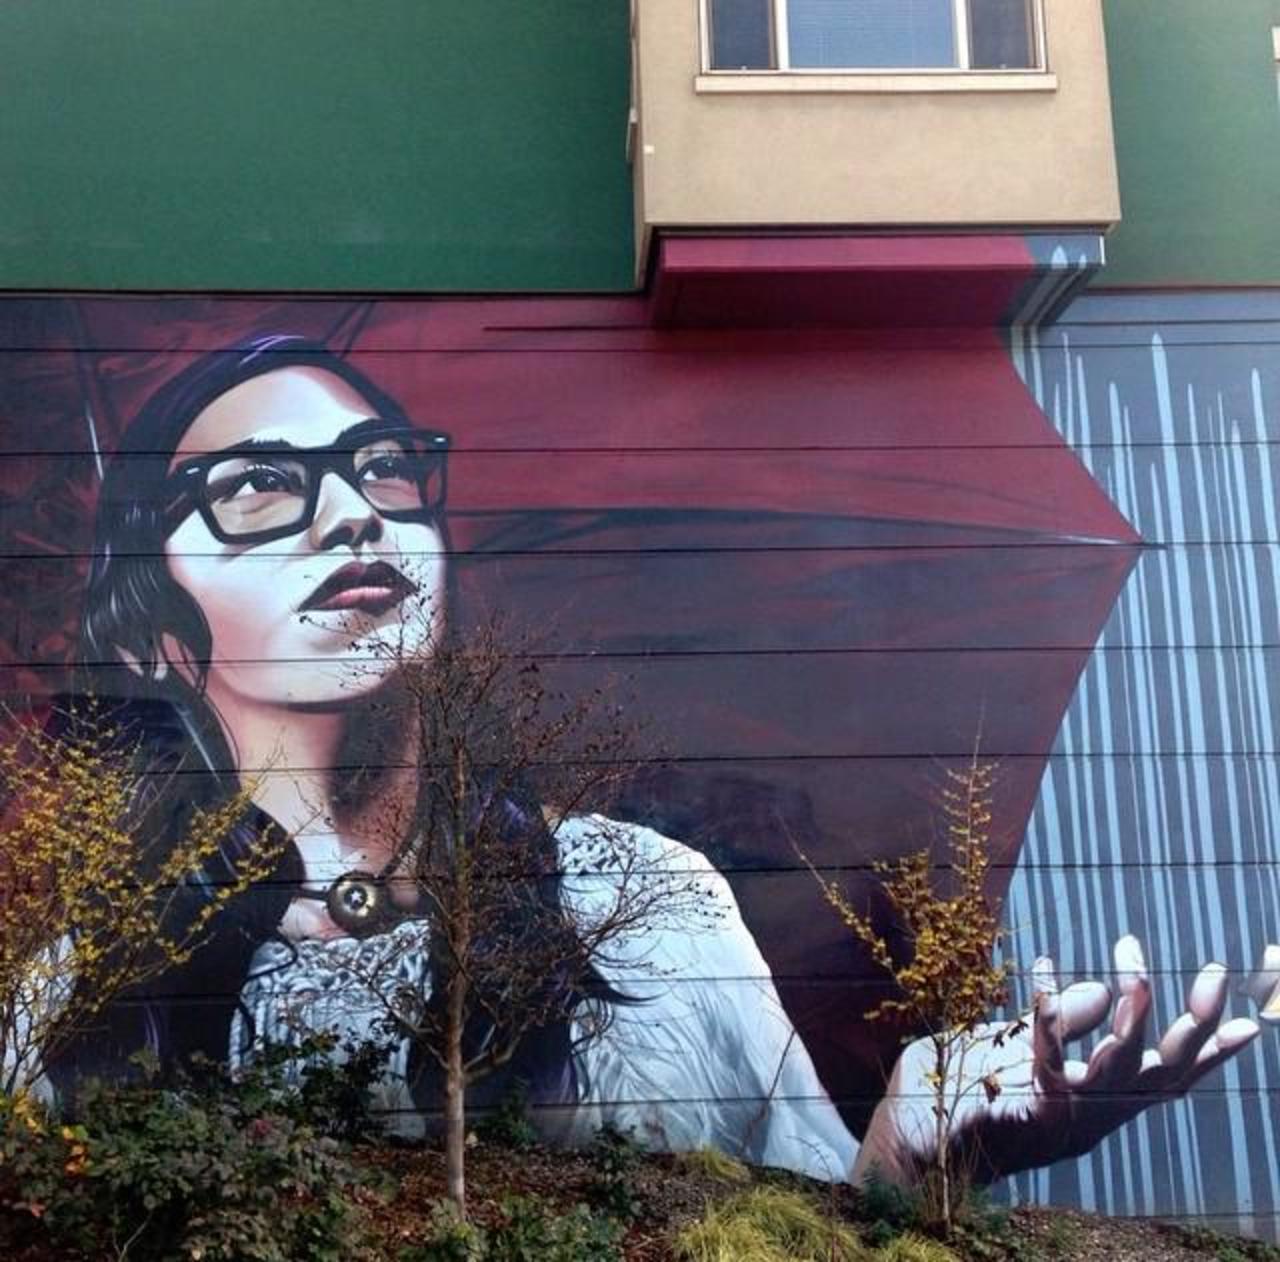 Artist Eras MFK Street Art piece in Capitol Hill, Seattle

#art #mural #graffiti #streetart http://t.co/SKgCgYauwE